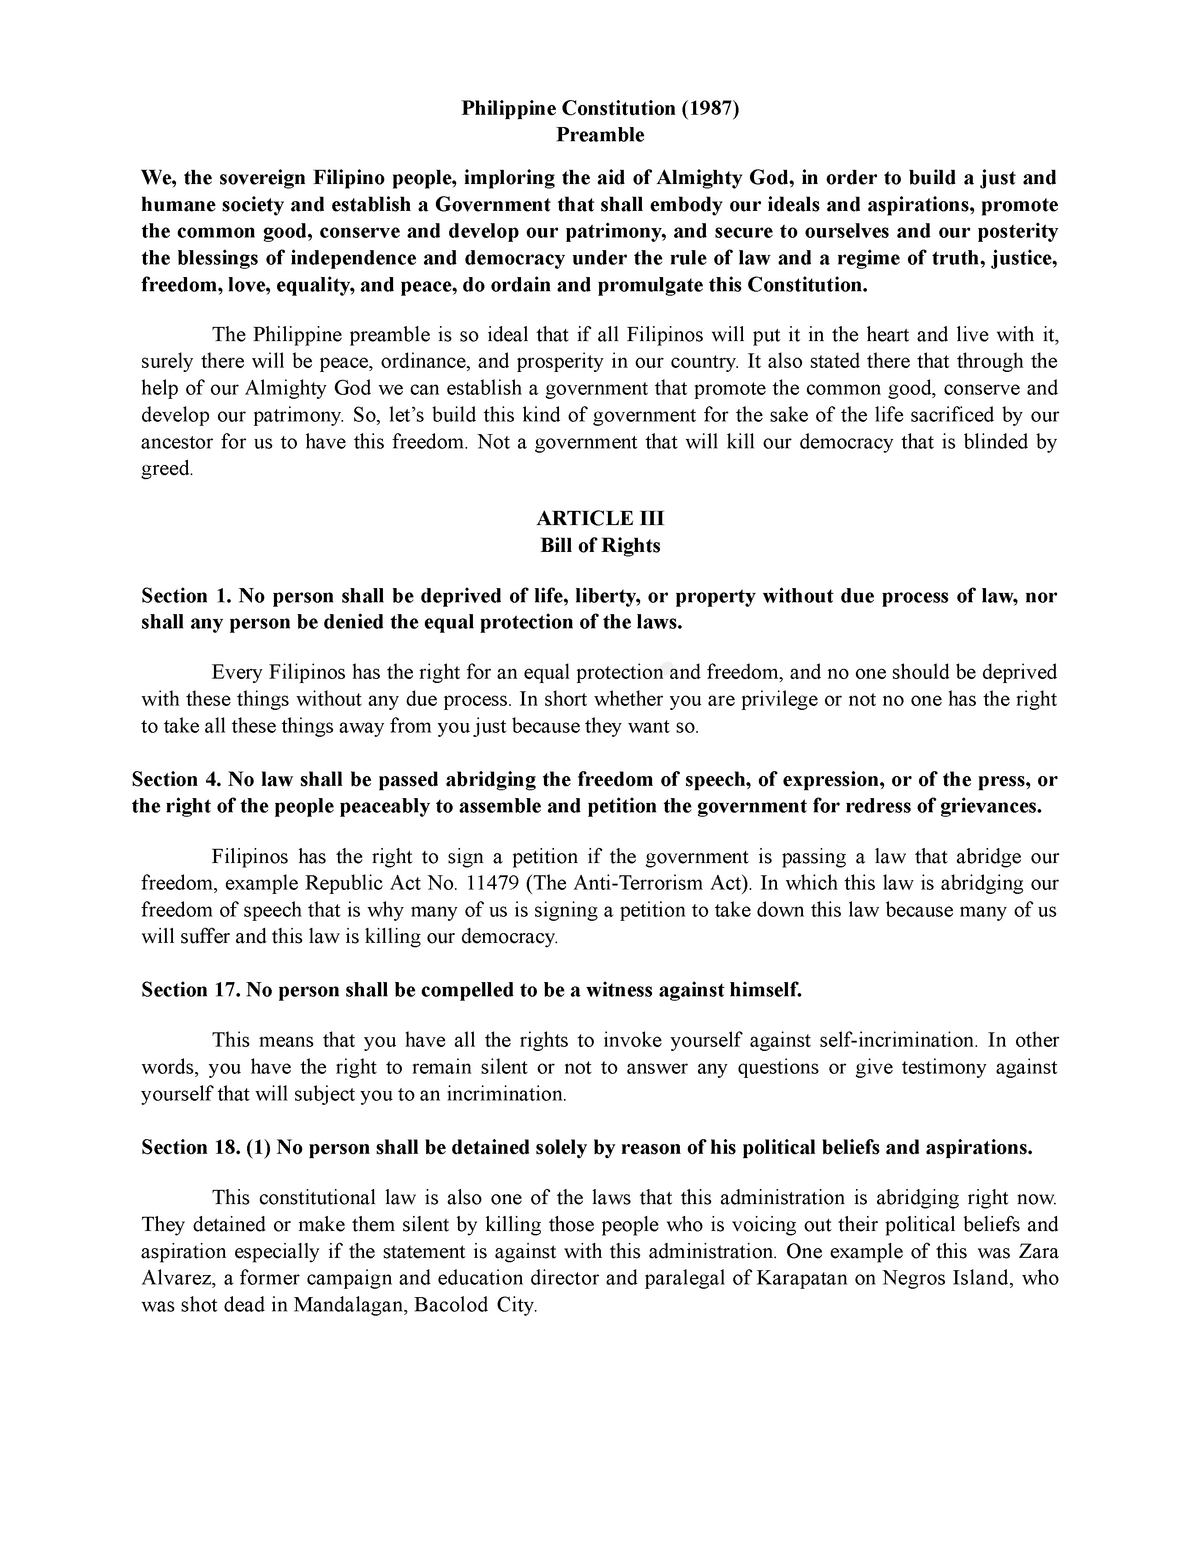 preamble of the 1987 philippine constitution essay